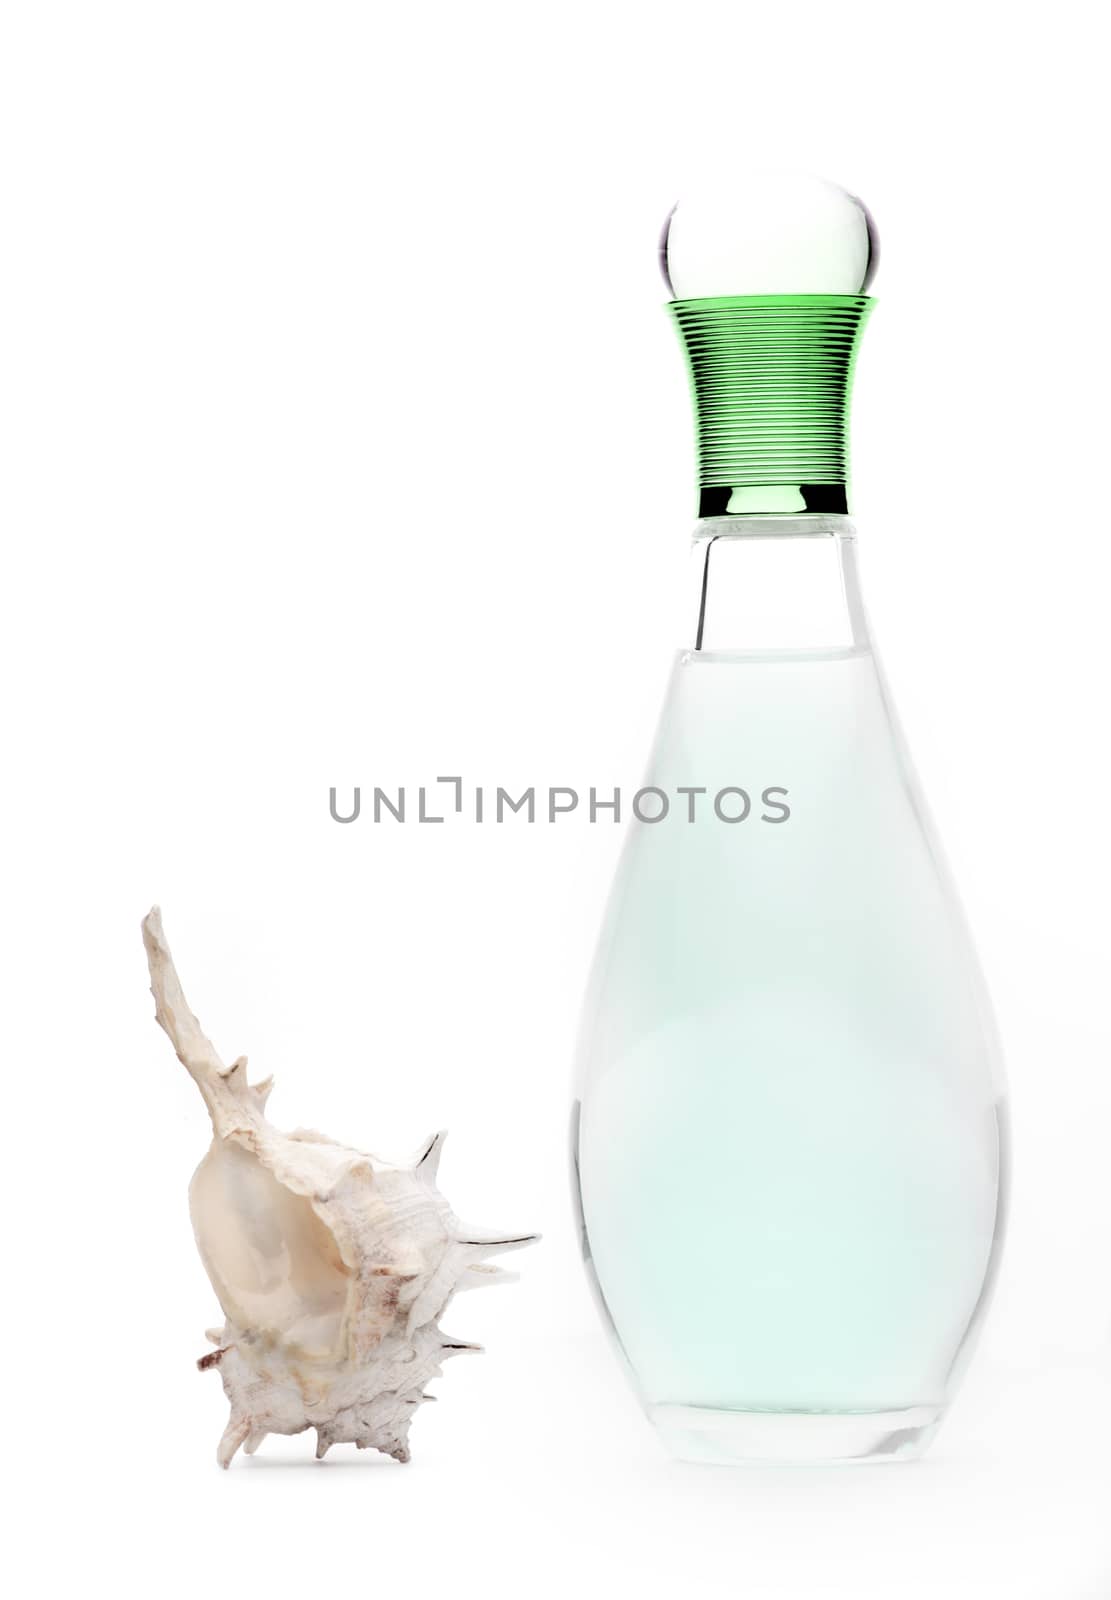 perfume bottle white background by Jonicartoon